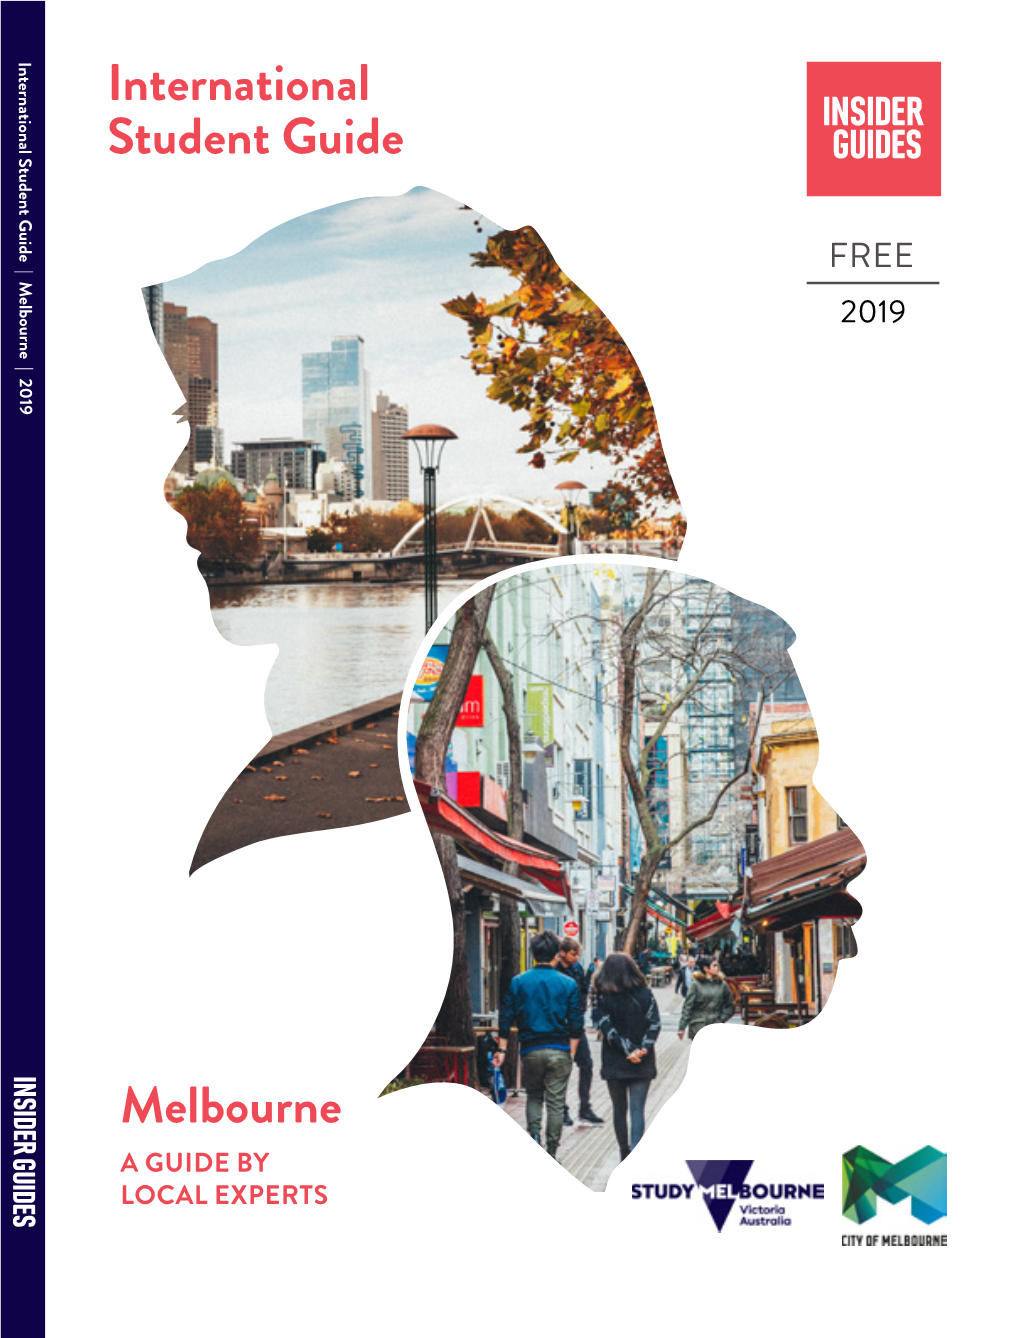 International Student Guide Melbourne